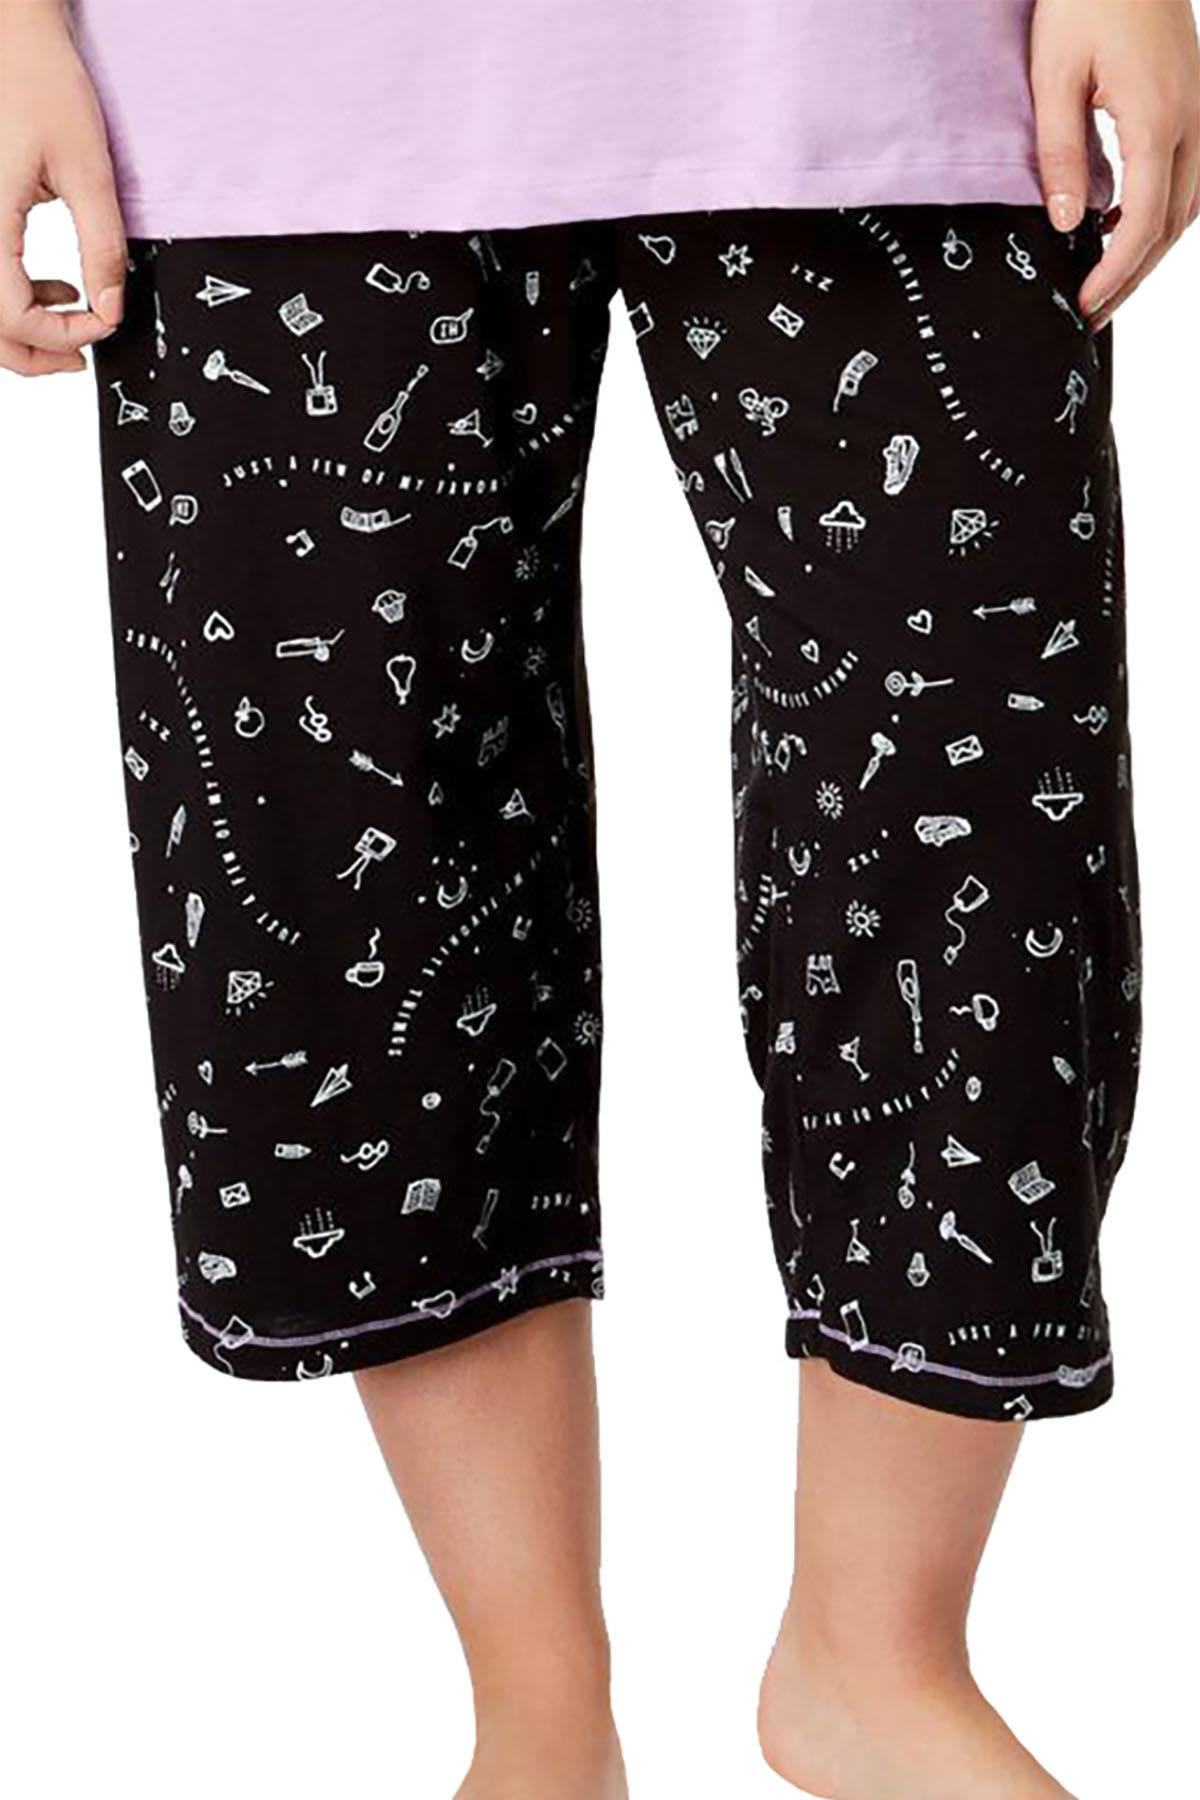 HUE PLUS Lilac/Black Printed Capri Pajama Set